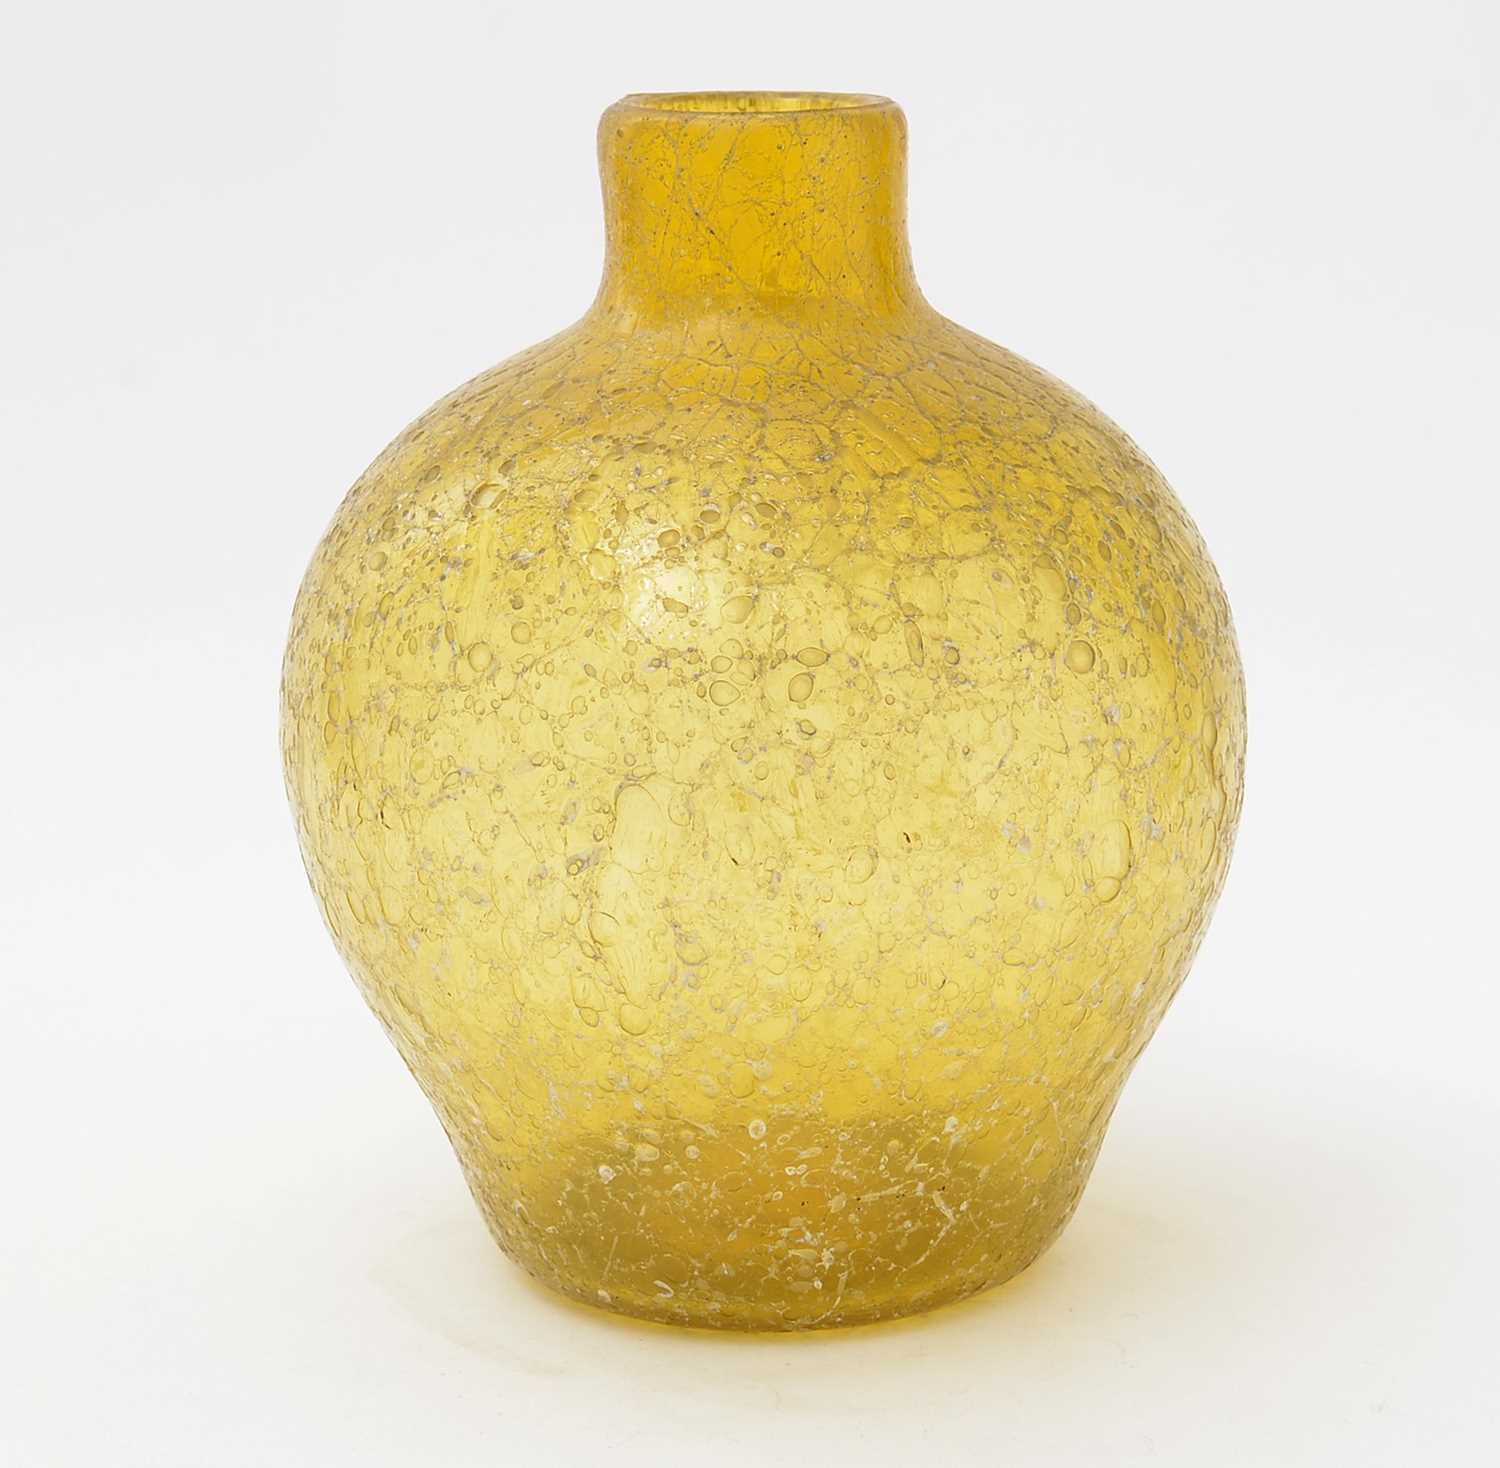 Webb crizzled glass vase - Image 2 of 6